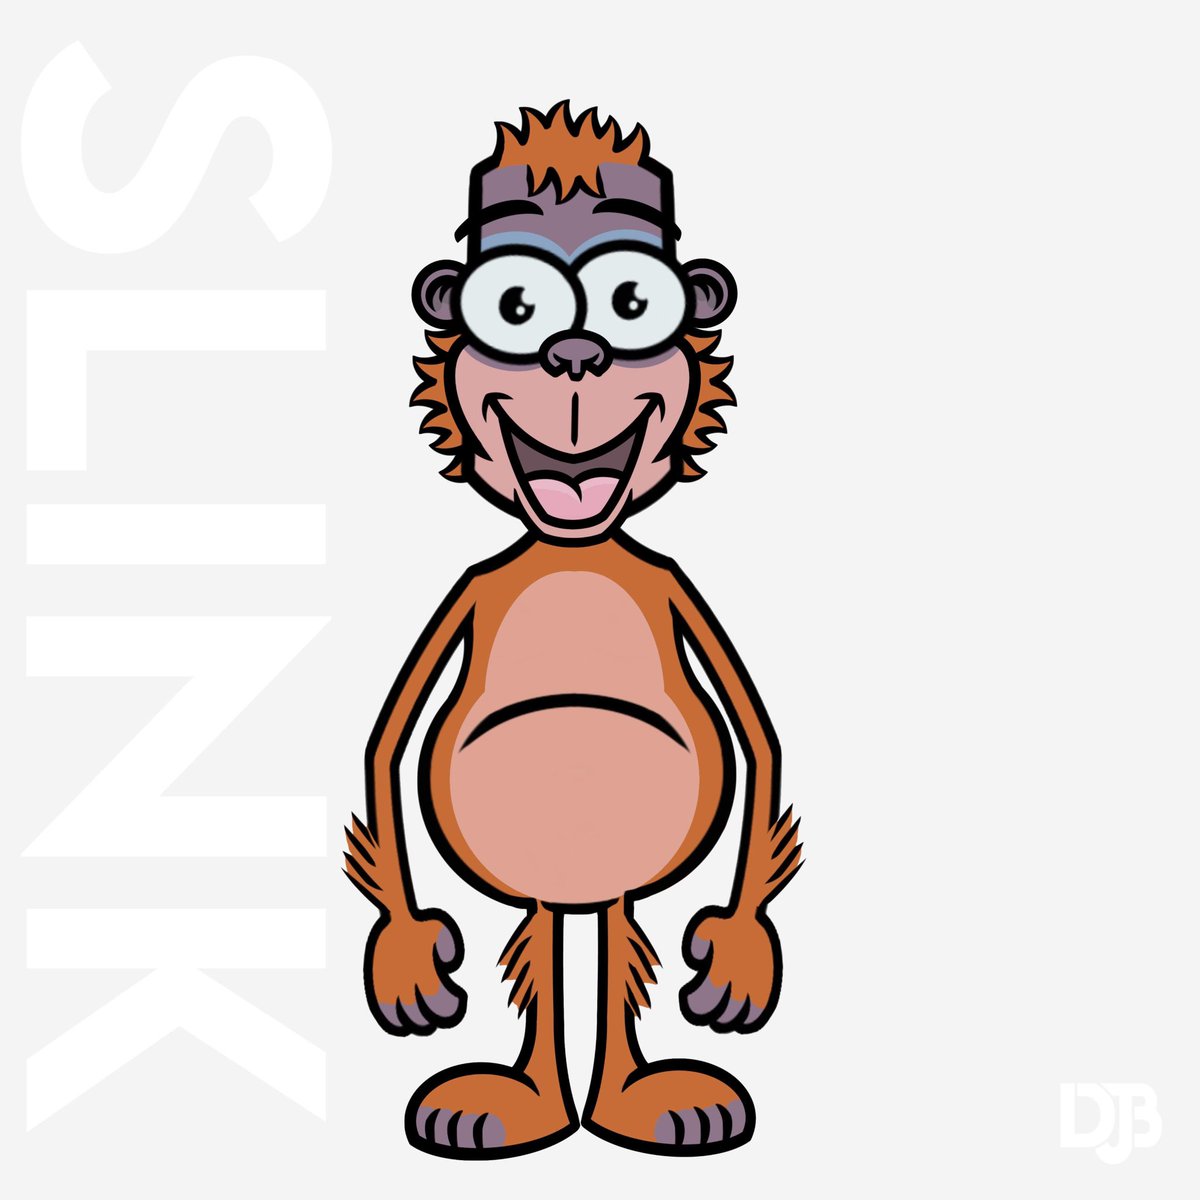 King Louie got SLINKd #kinglouie #kingoftheswingers #louisprima #junglebook #disneyjunglebook #bearnecessities #disney #waltdisney #disneyclassic #nostalgia #slink #slinkd #djbu #artistofinstagram #artwork  #artist #characterdesign